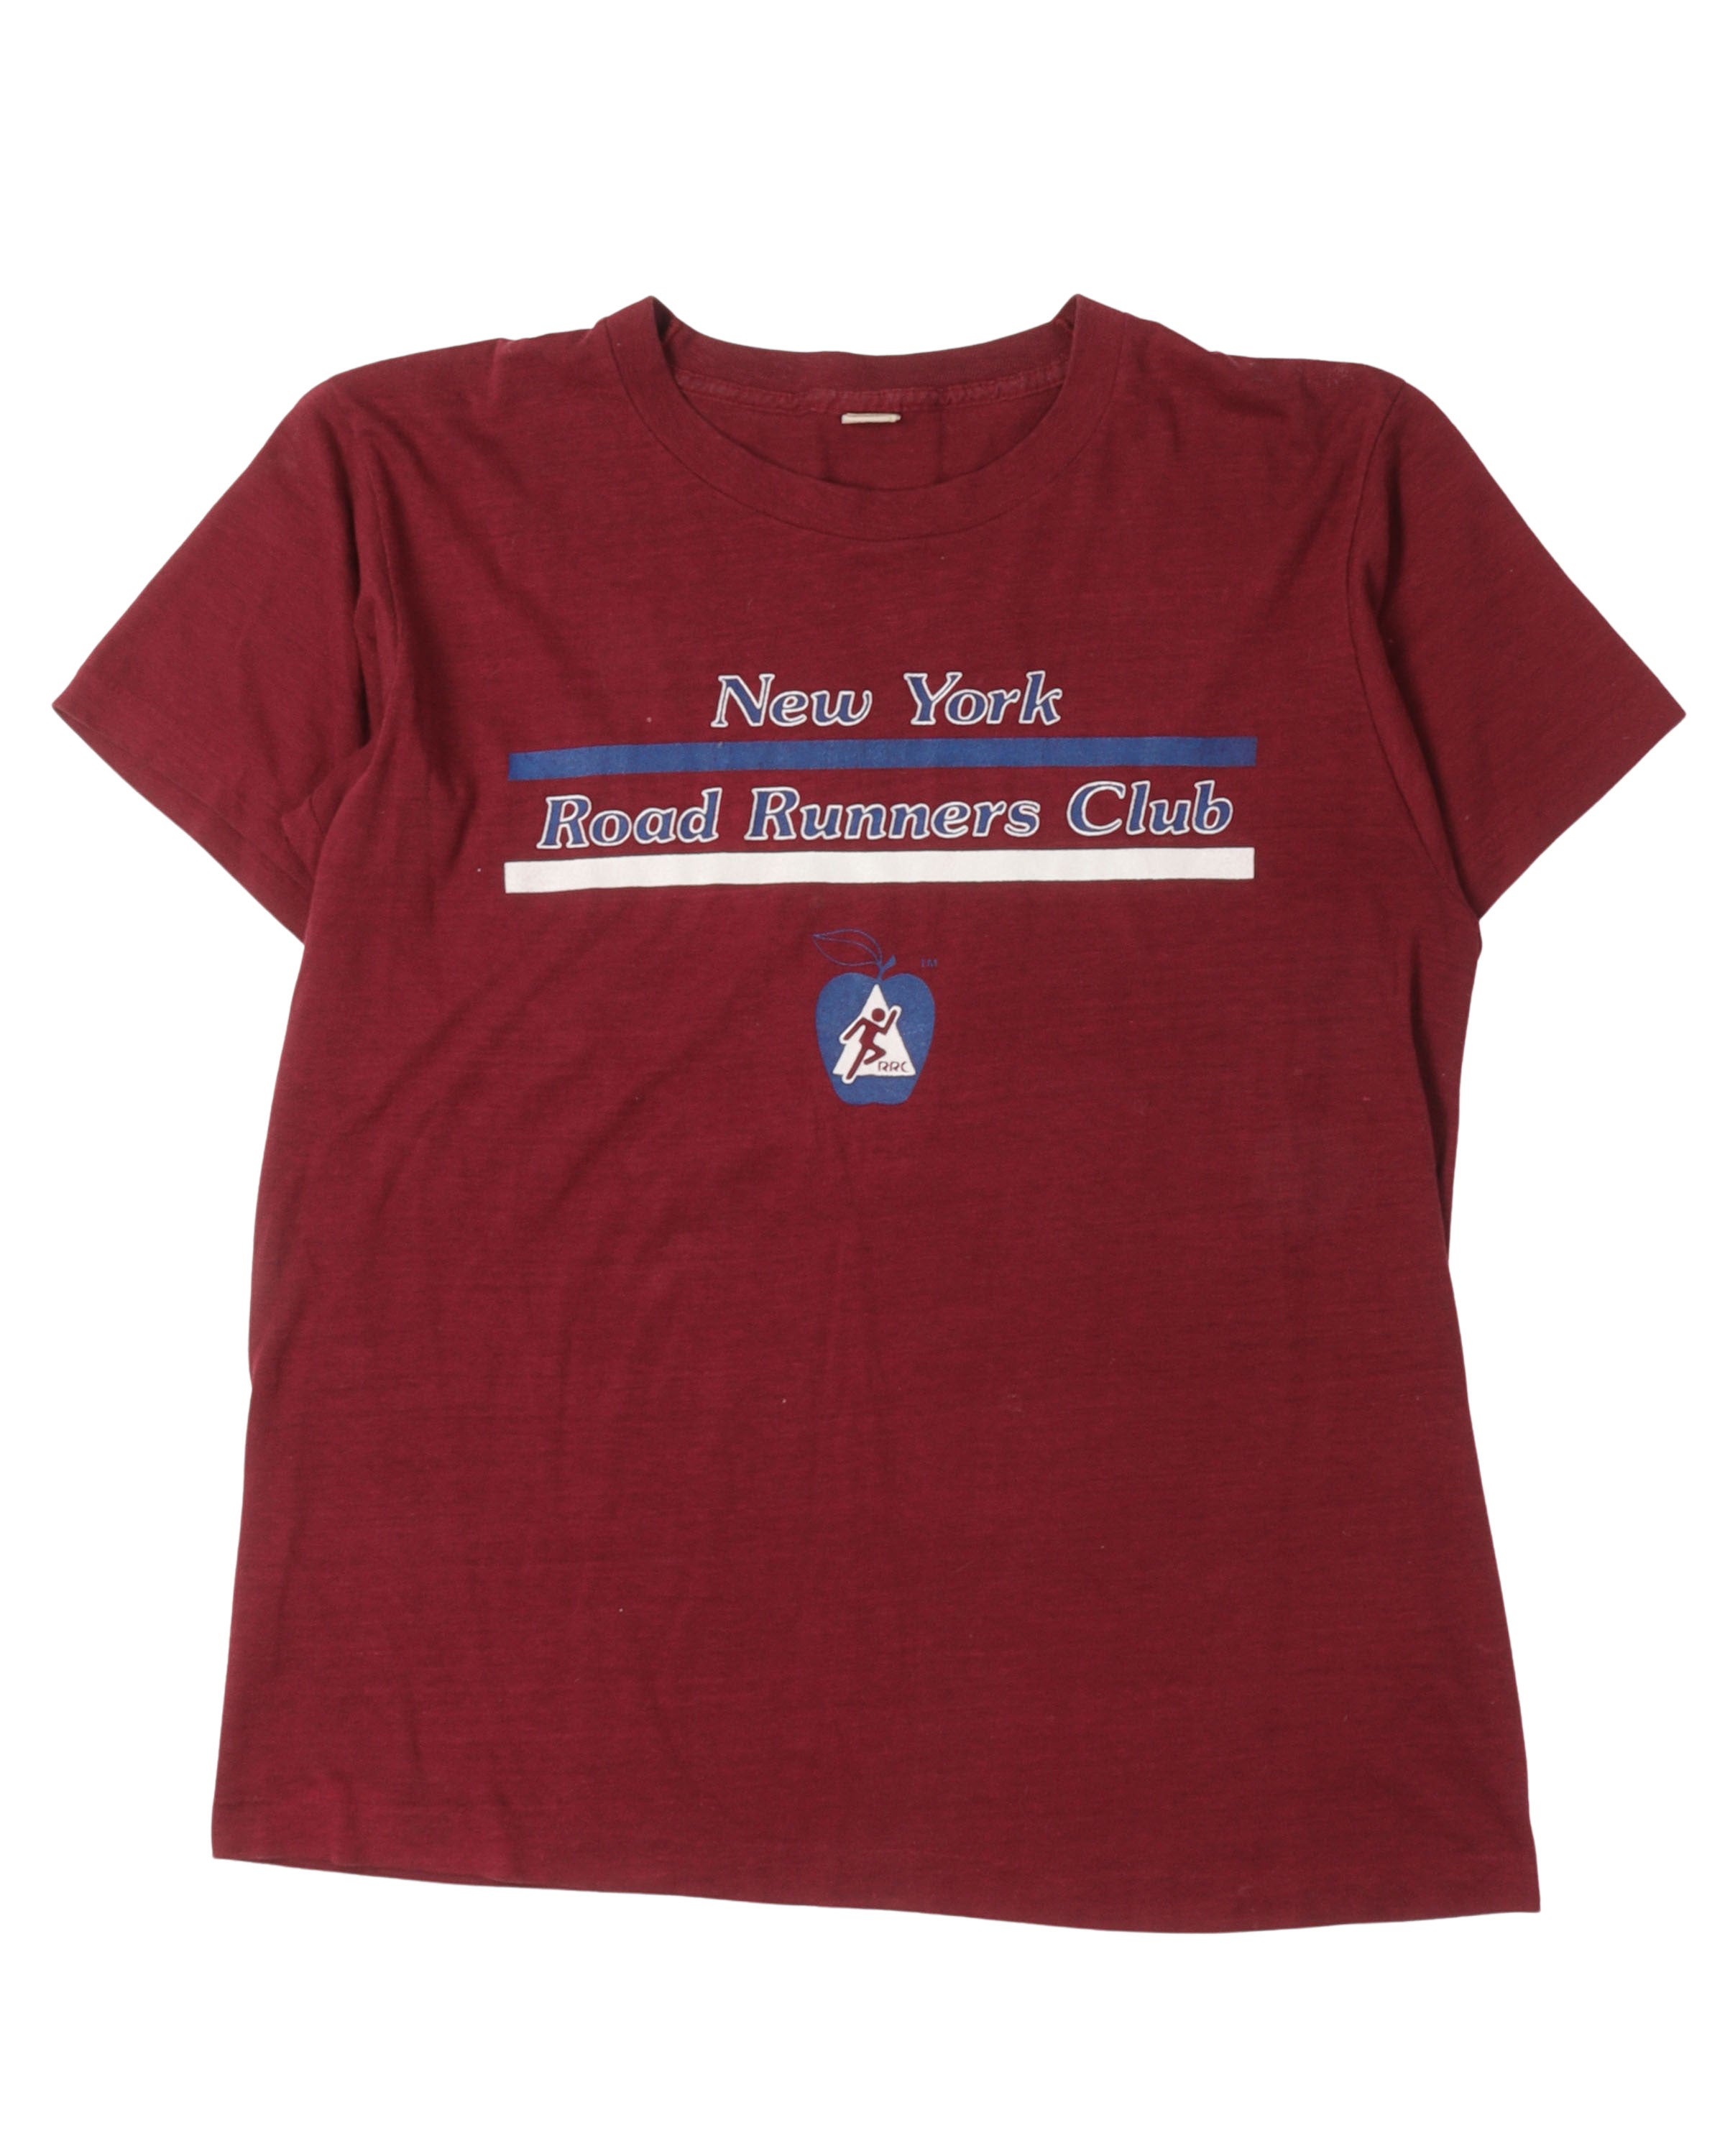 New York Road Runners Club T-Shirt